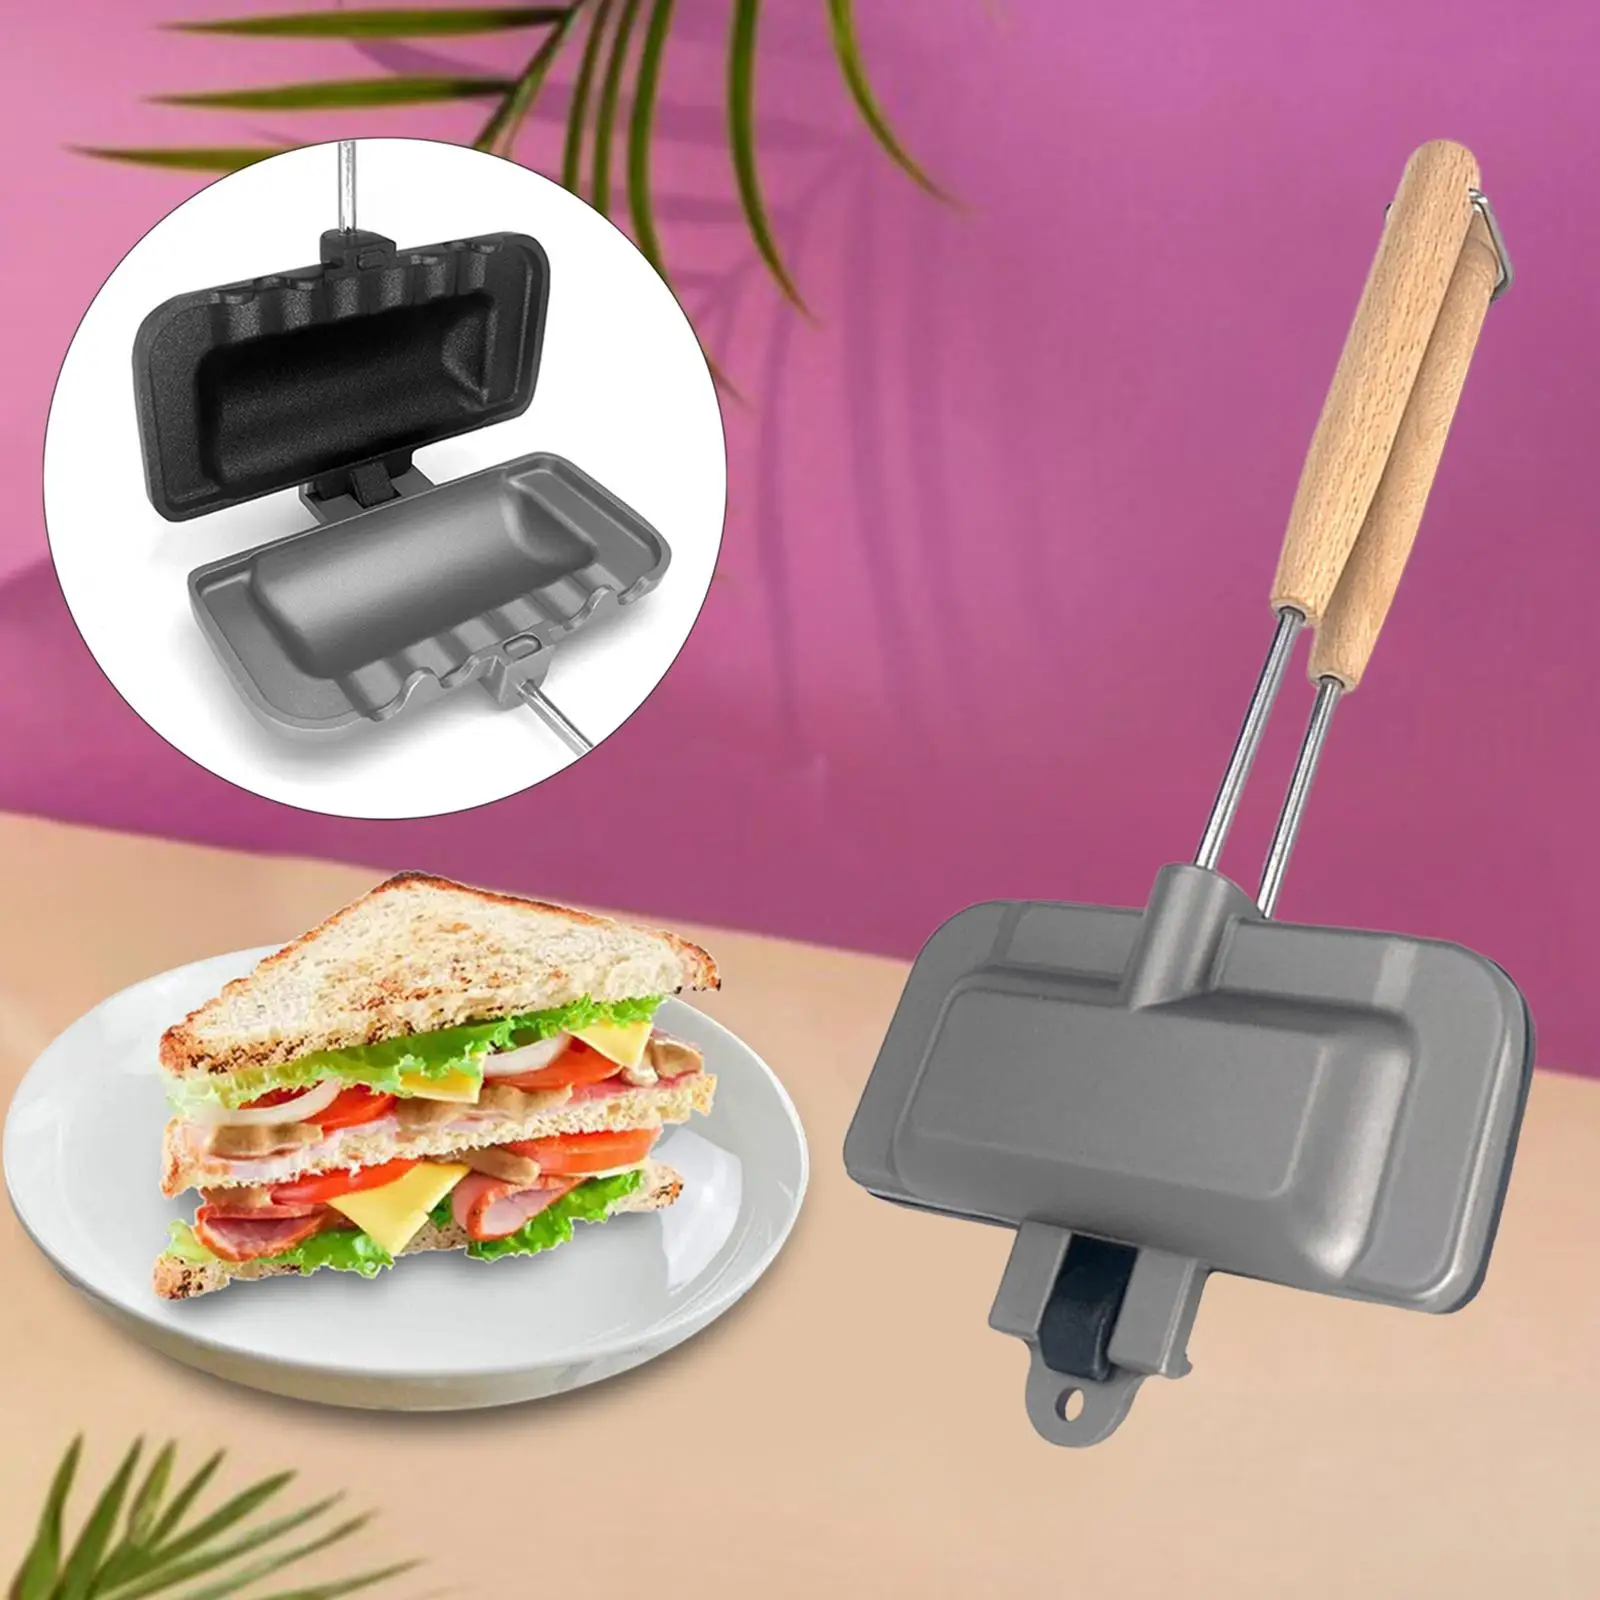 Multifunction Sandwich Maker Pancake Maker Breakfast Pot Baking Pan with Handle for Home Dining Room Kitchen Cafe Restaurant